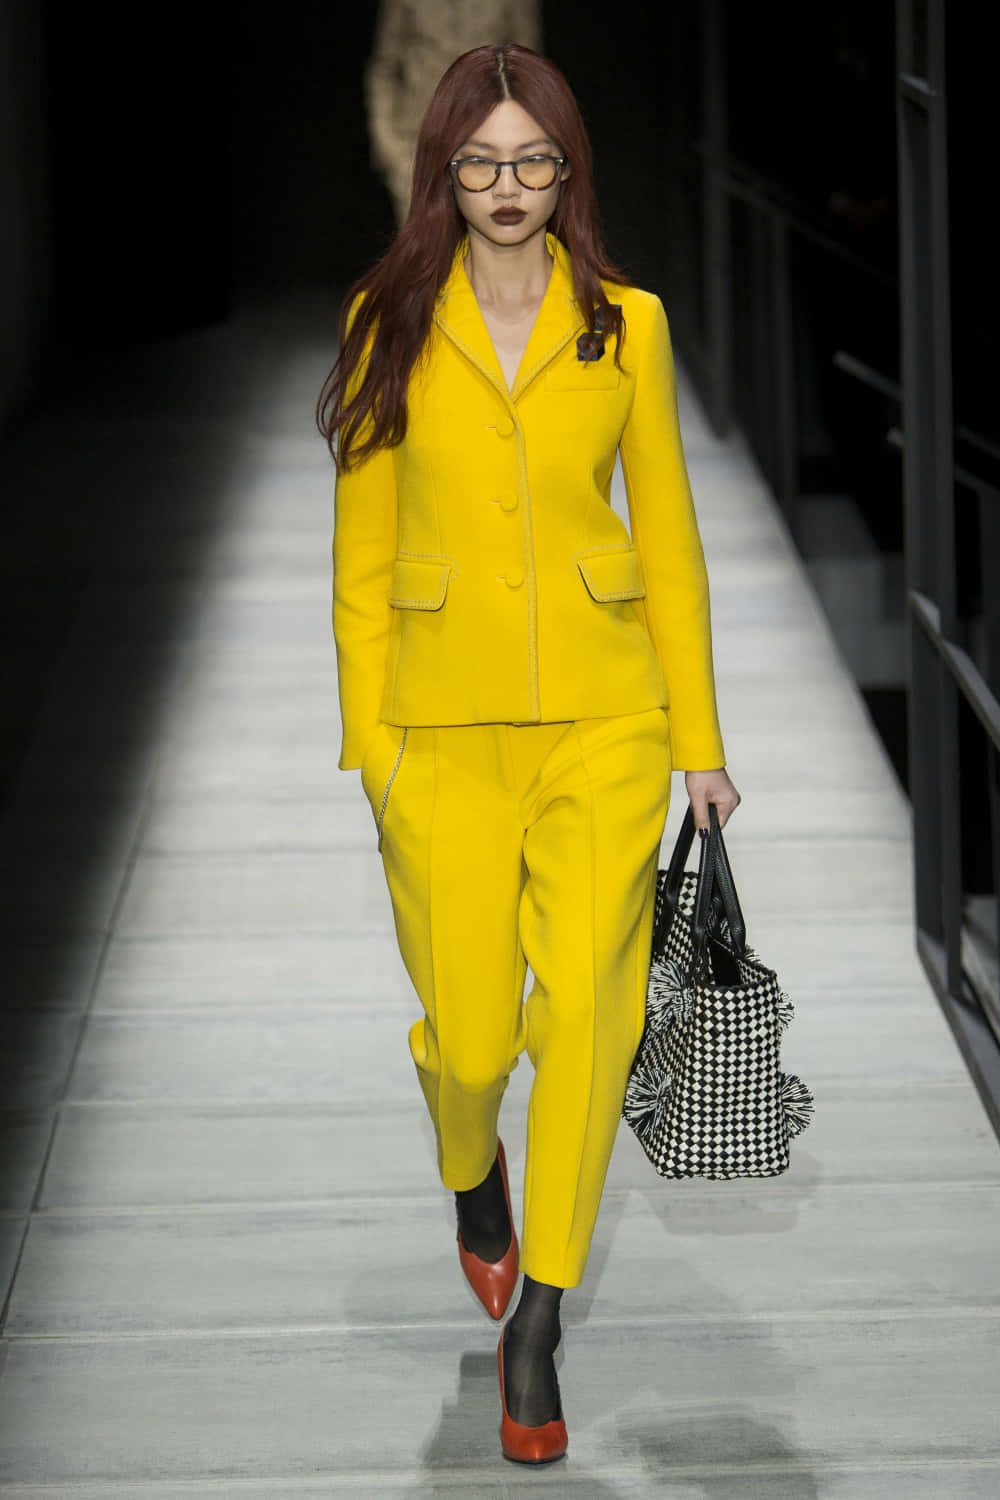 Striking Yellow Outfit on Fashion Model Wallpaper